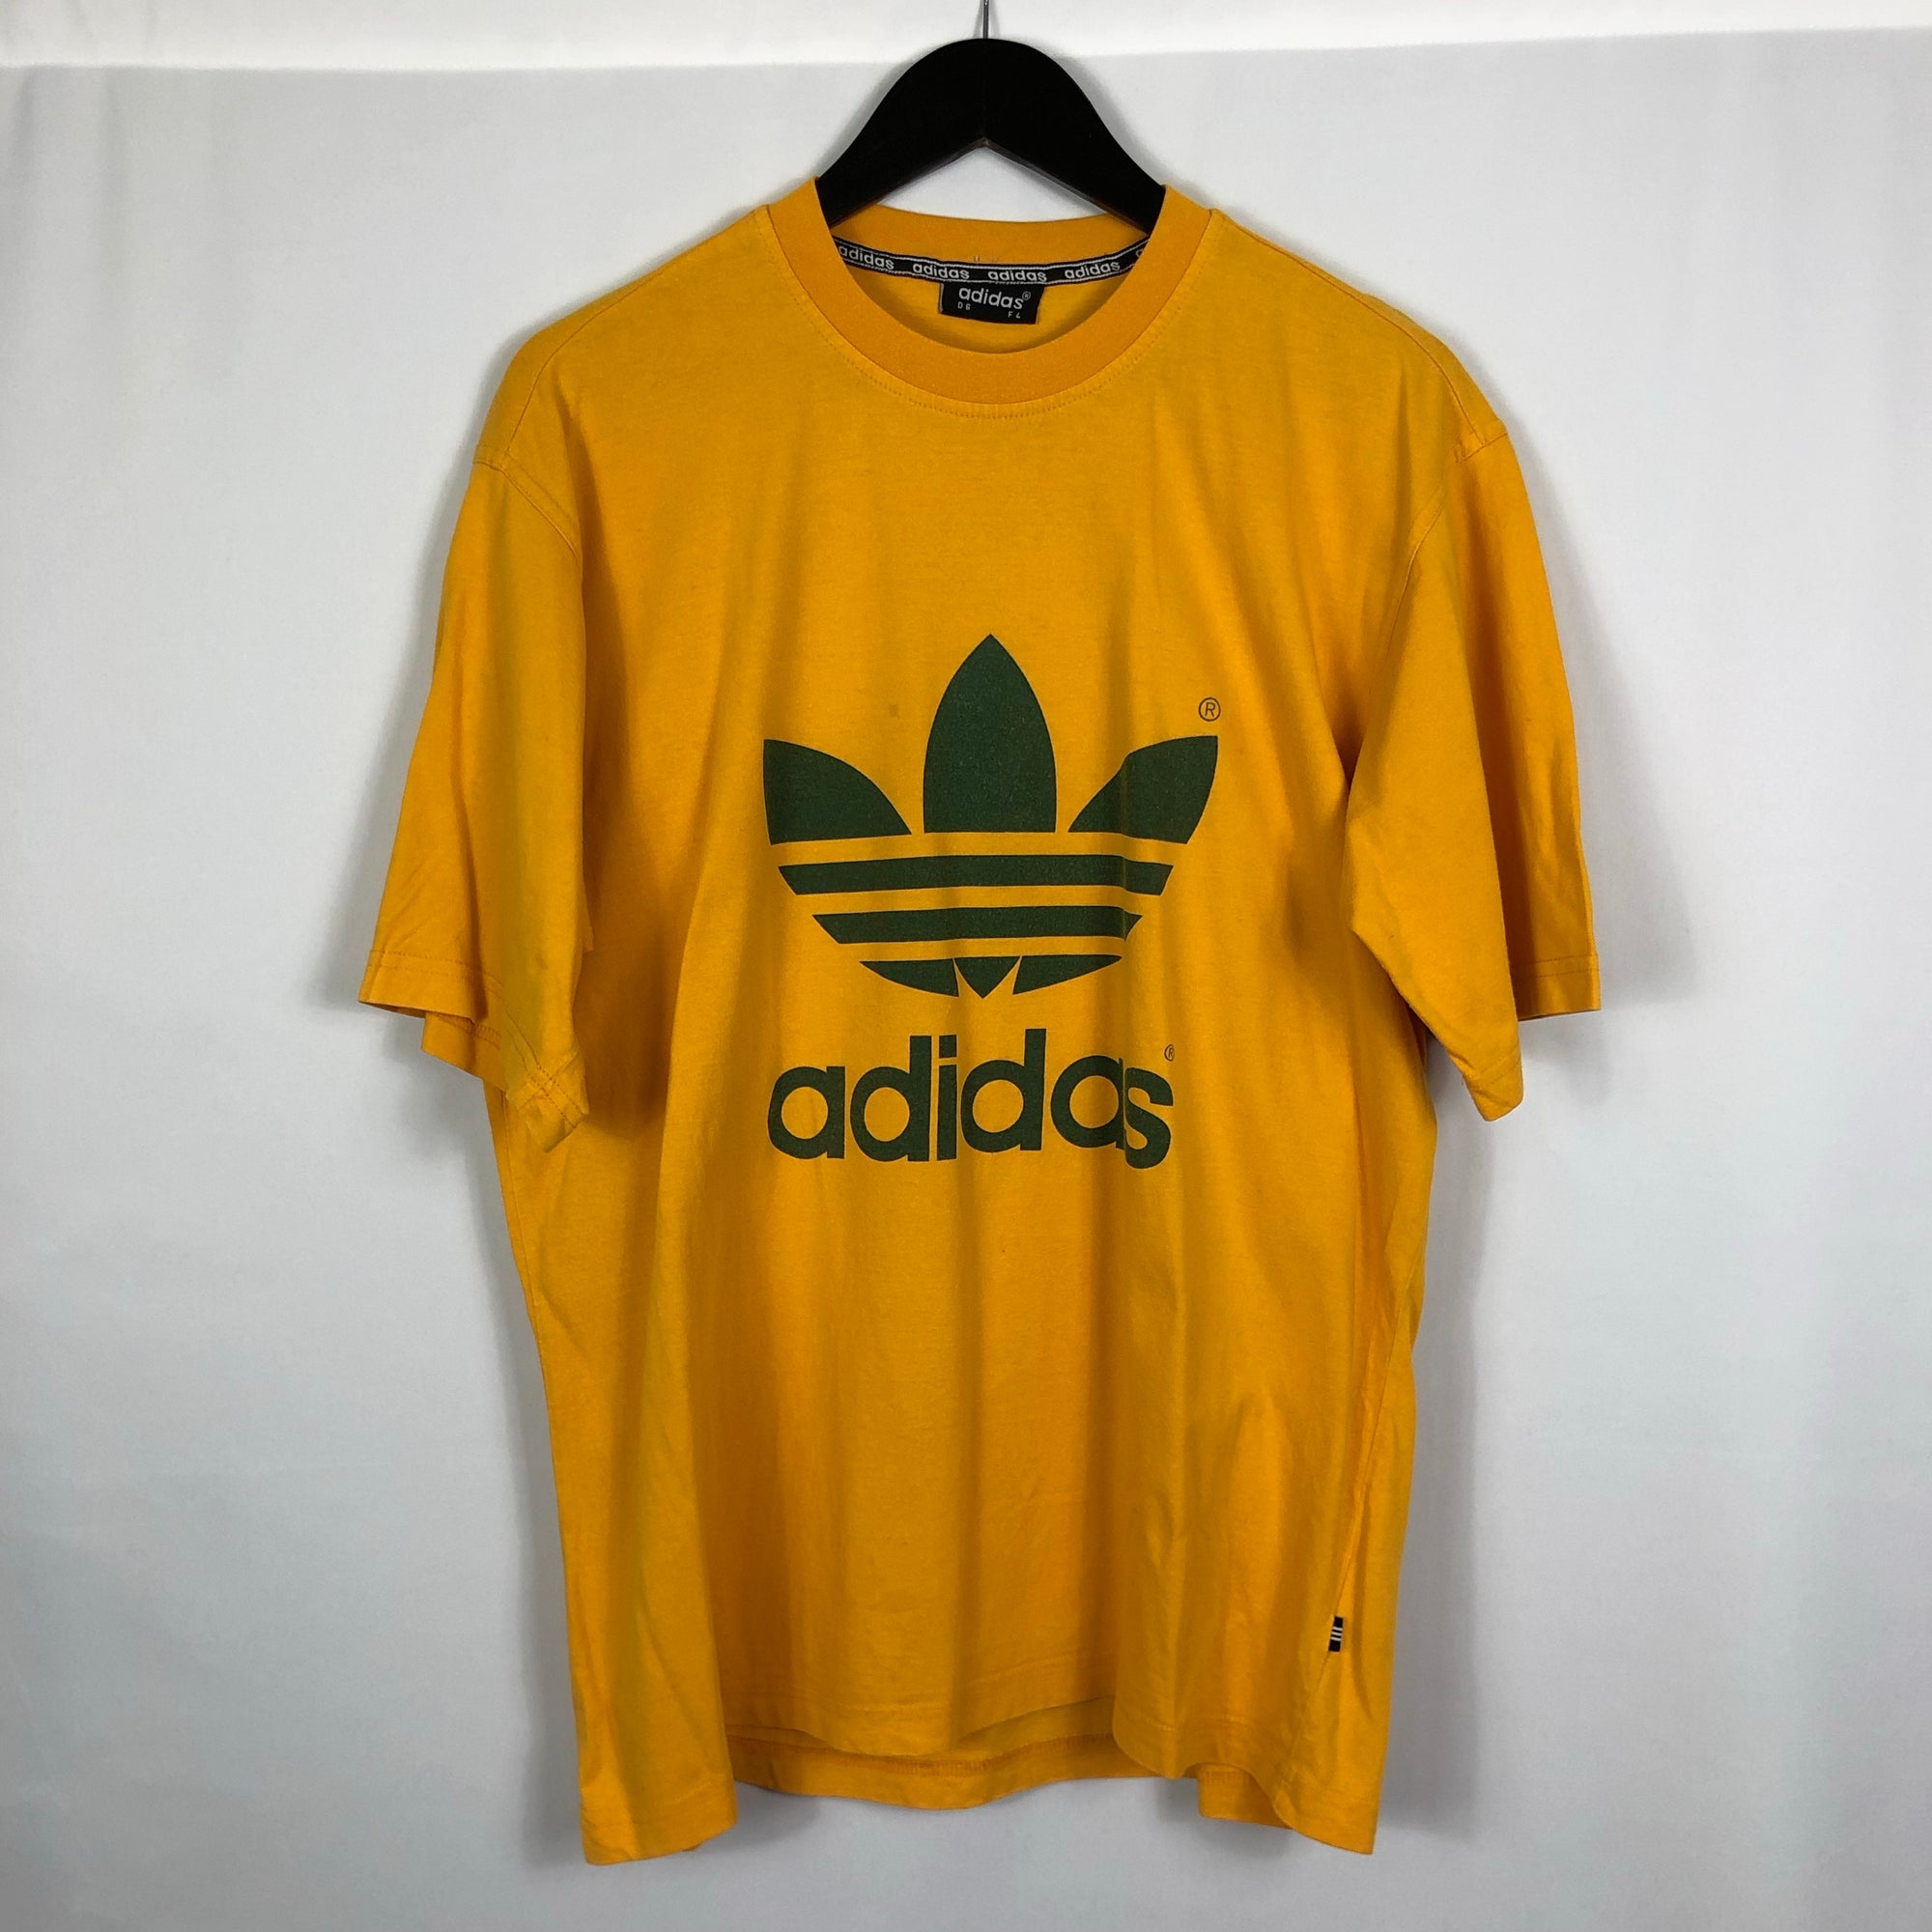 Vintage Adidas Tee in Yellow - Men’s Large/Women’s XL